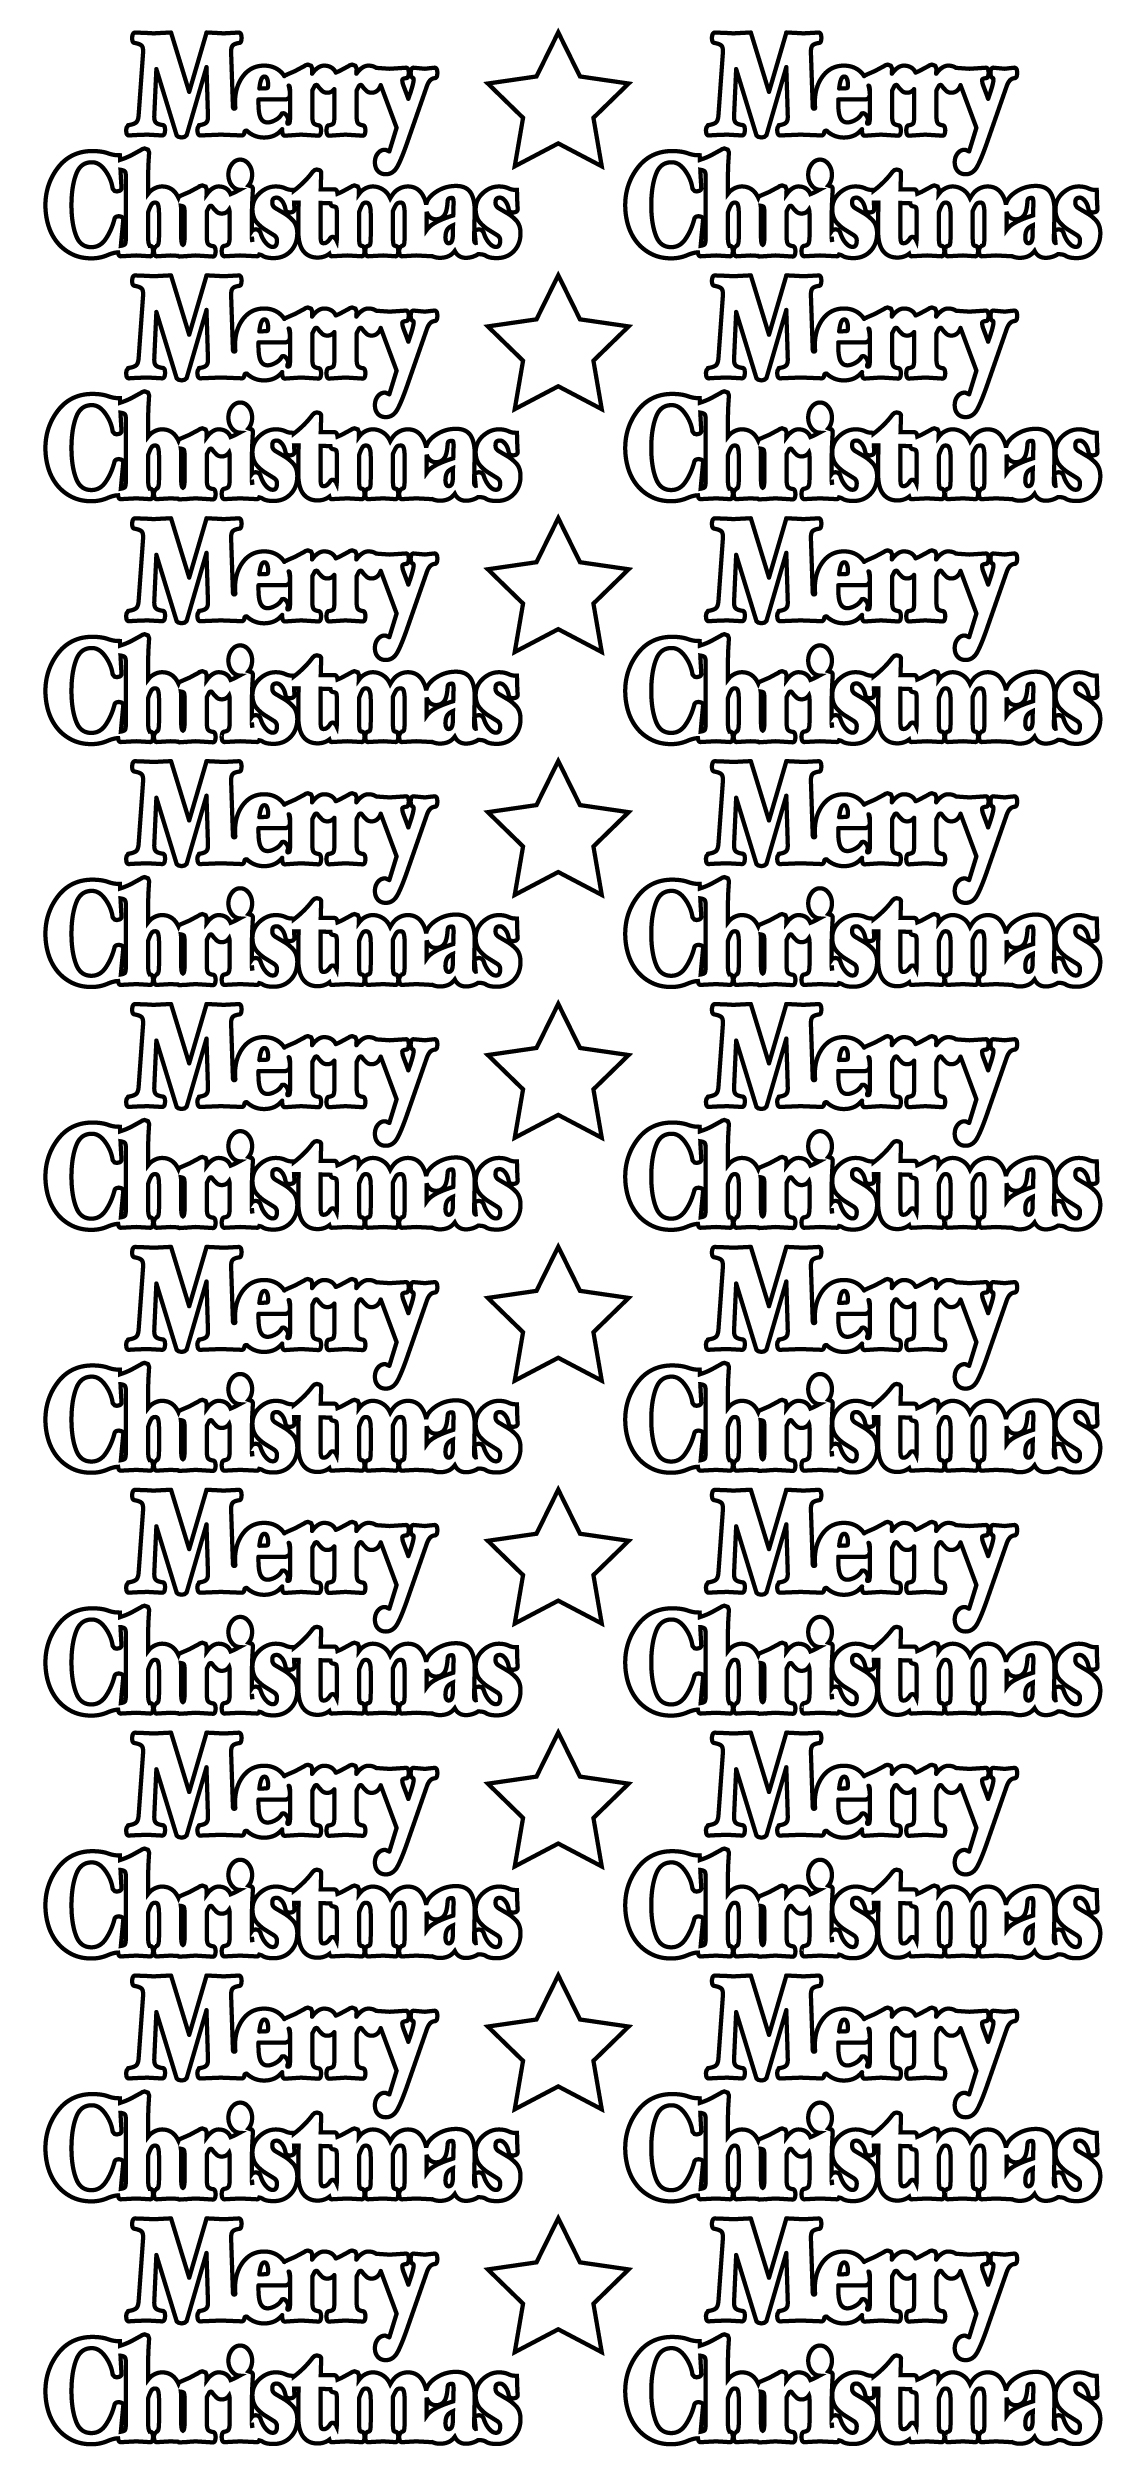 Artdeco-Merry Christmas Silver/Silver sticker sheet